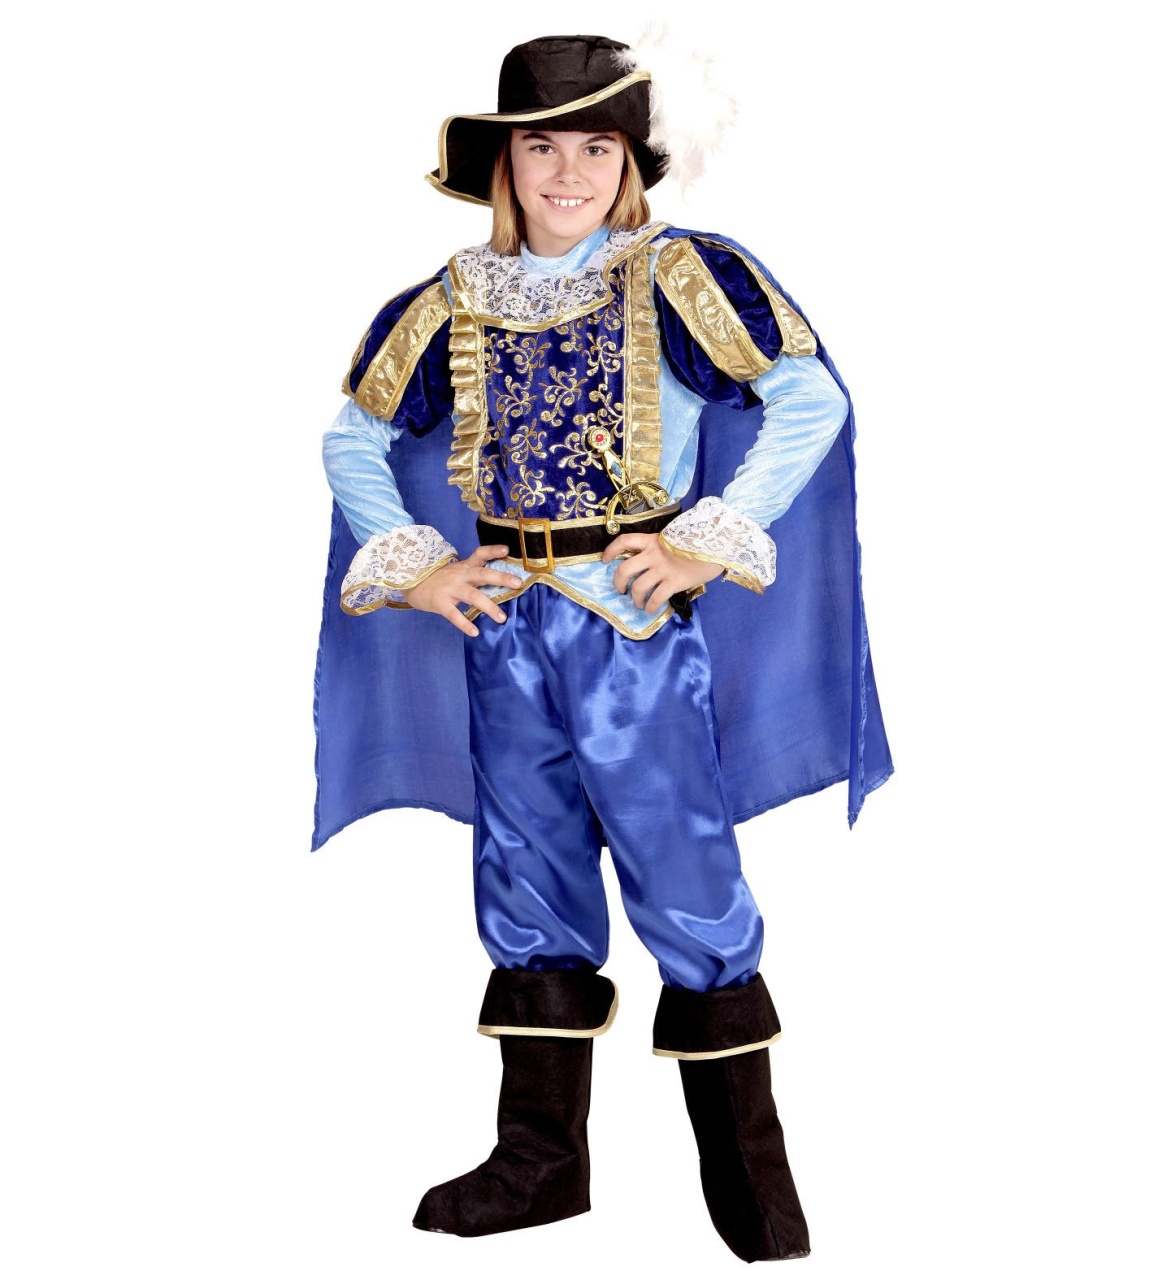 Kostüm Charming Prinz blau Gr. 116 4-5 Jahre Kinderkostüm